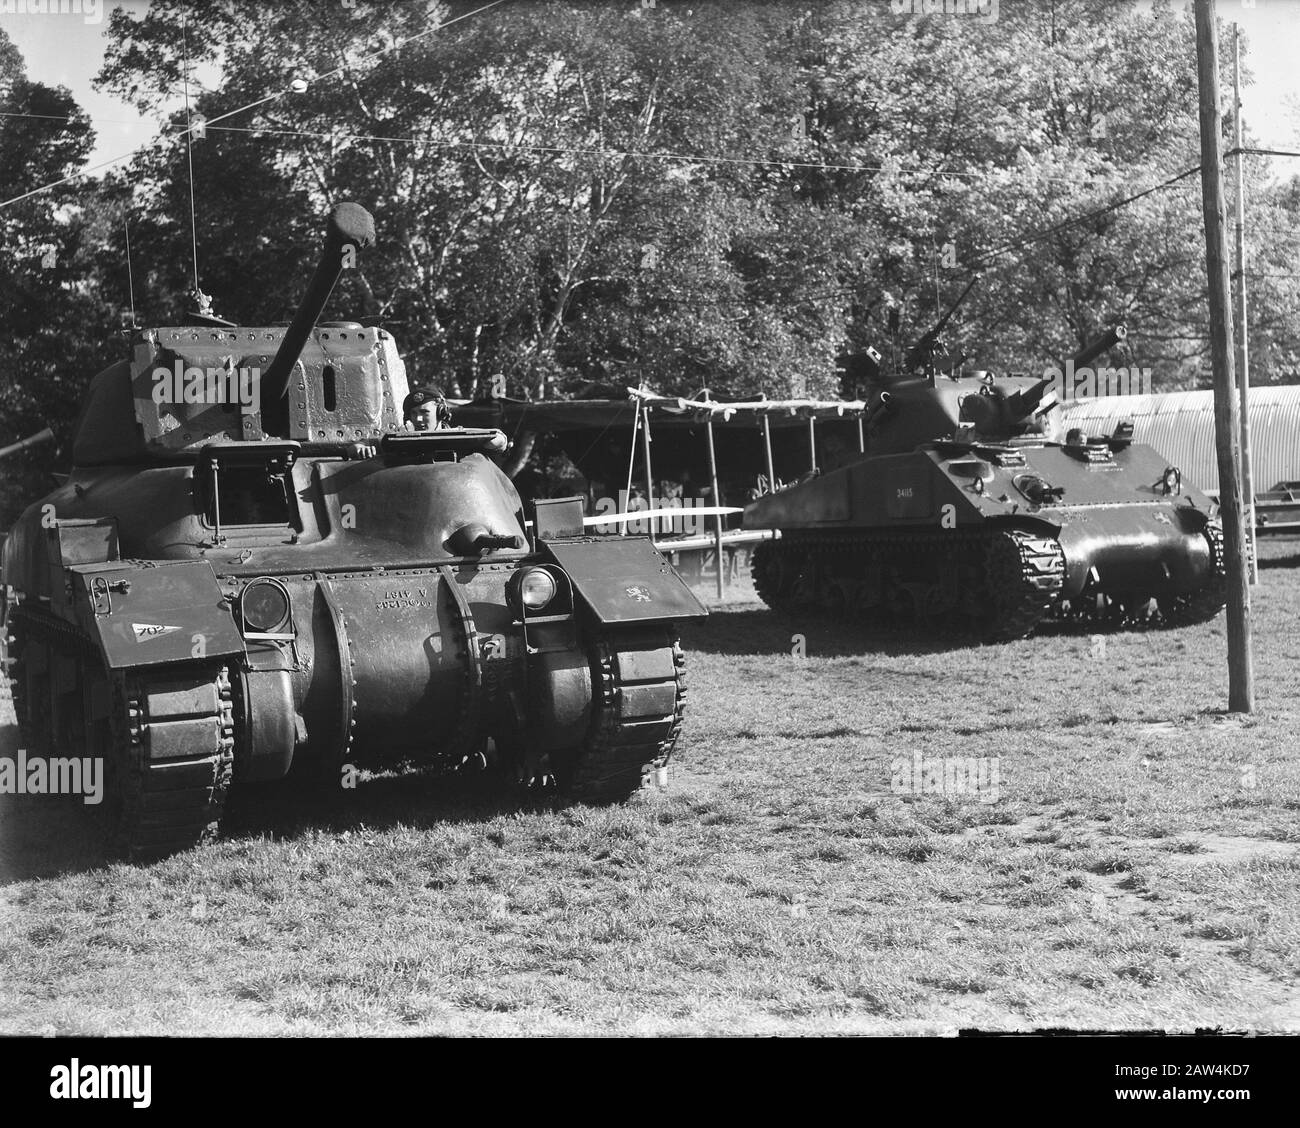 Army Exhibition Utrecht. Sherman tanks Date: May 14, 1948 Location: Utrecht Keywords: Military Trade, TANKS Person Name: SHERMAN Stock Photo